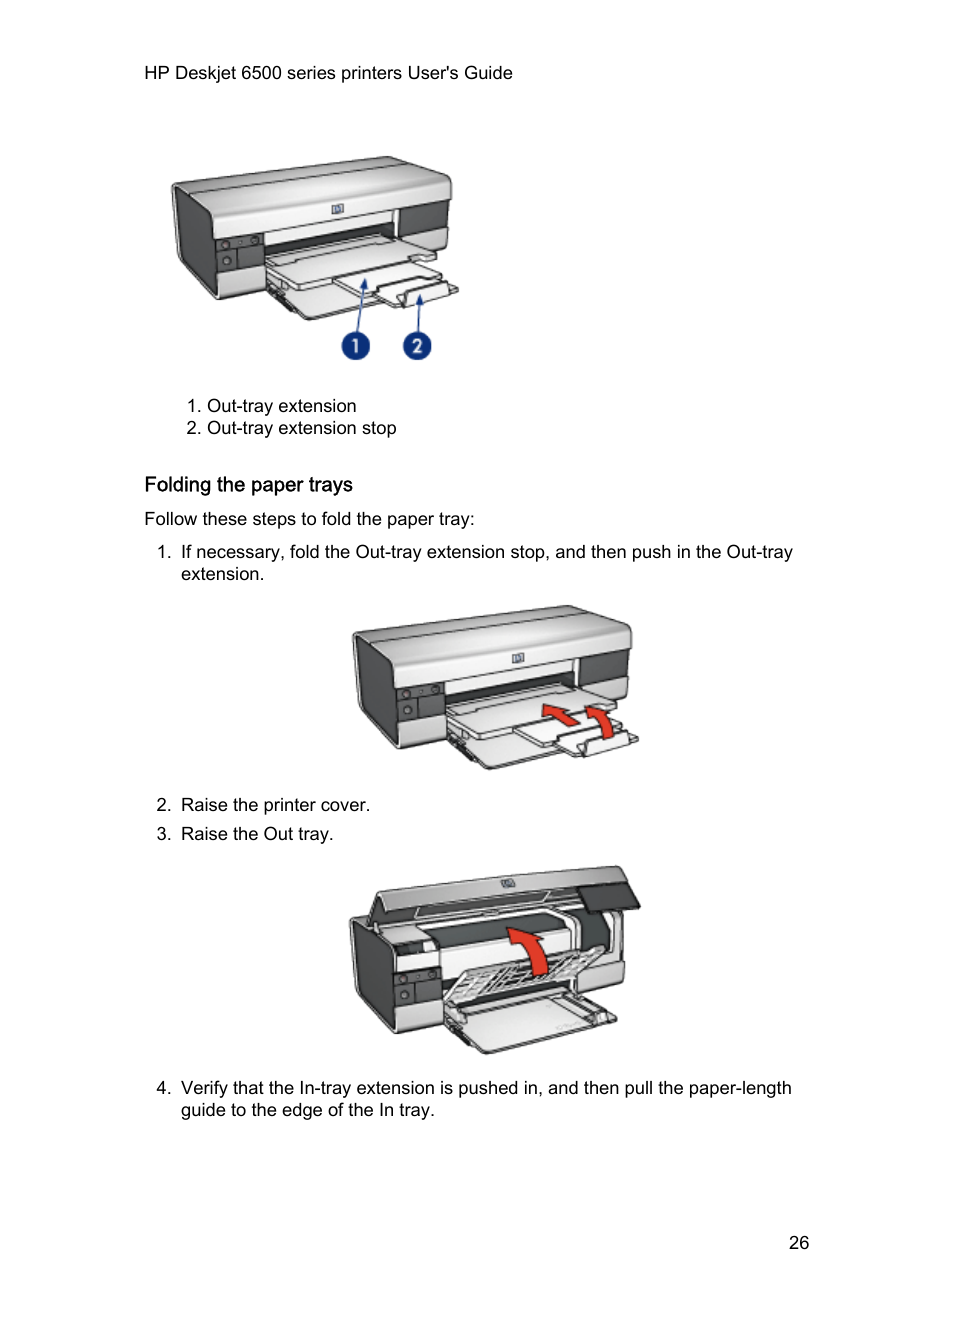 Folding the paper trays | HP Deskjet 6540 Color Inkjet Printer User Manual  | Page 26 / 195